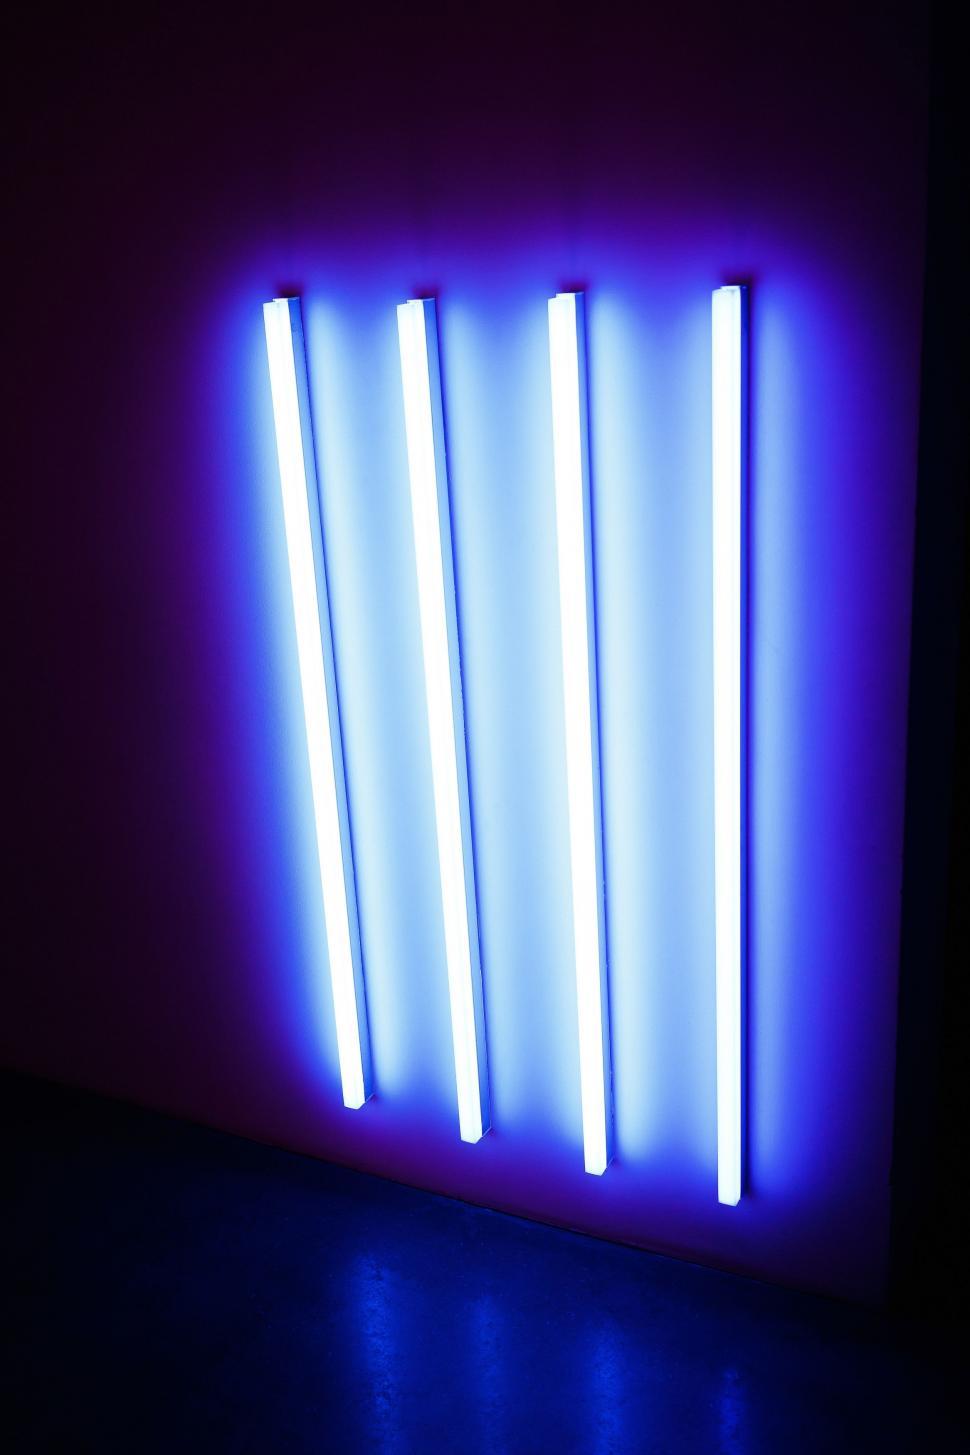 Free Image of Blue Light Shining in Dark Room 